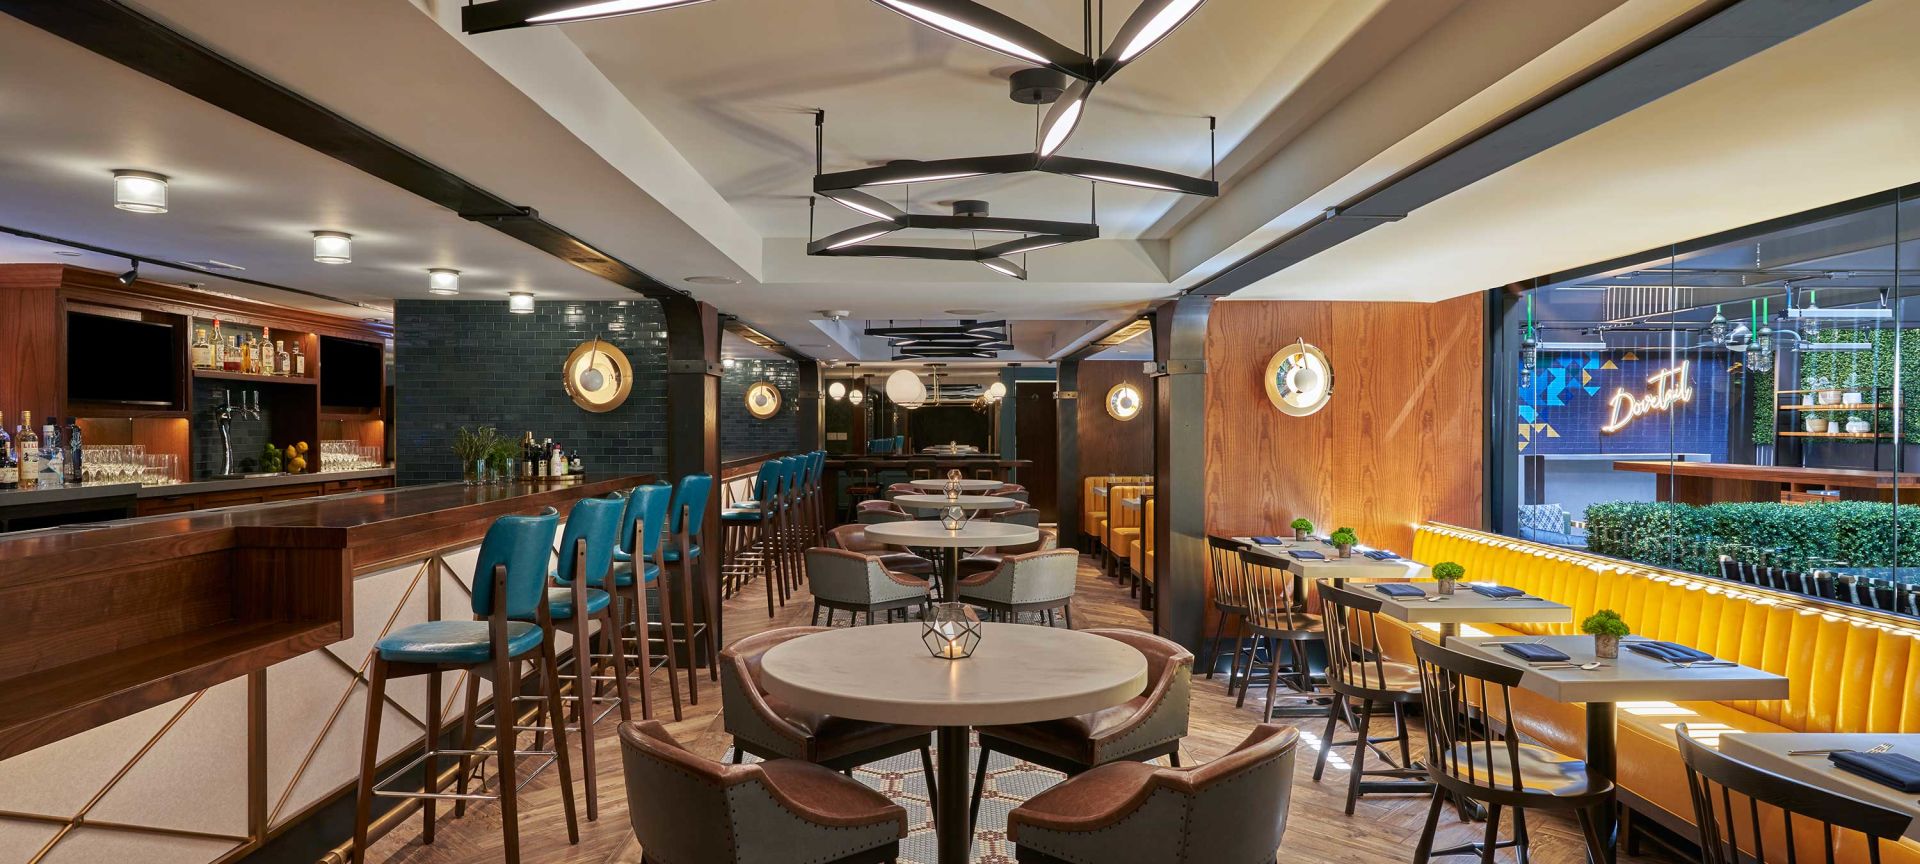 Dovetail Restaurant and Bar